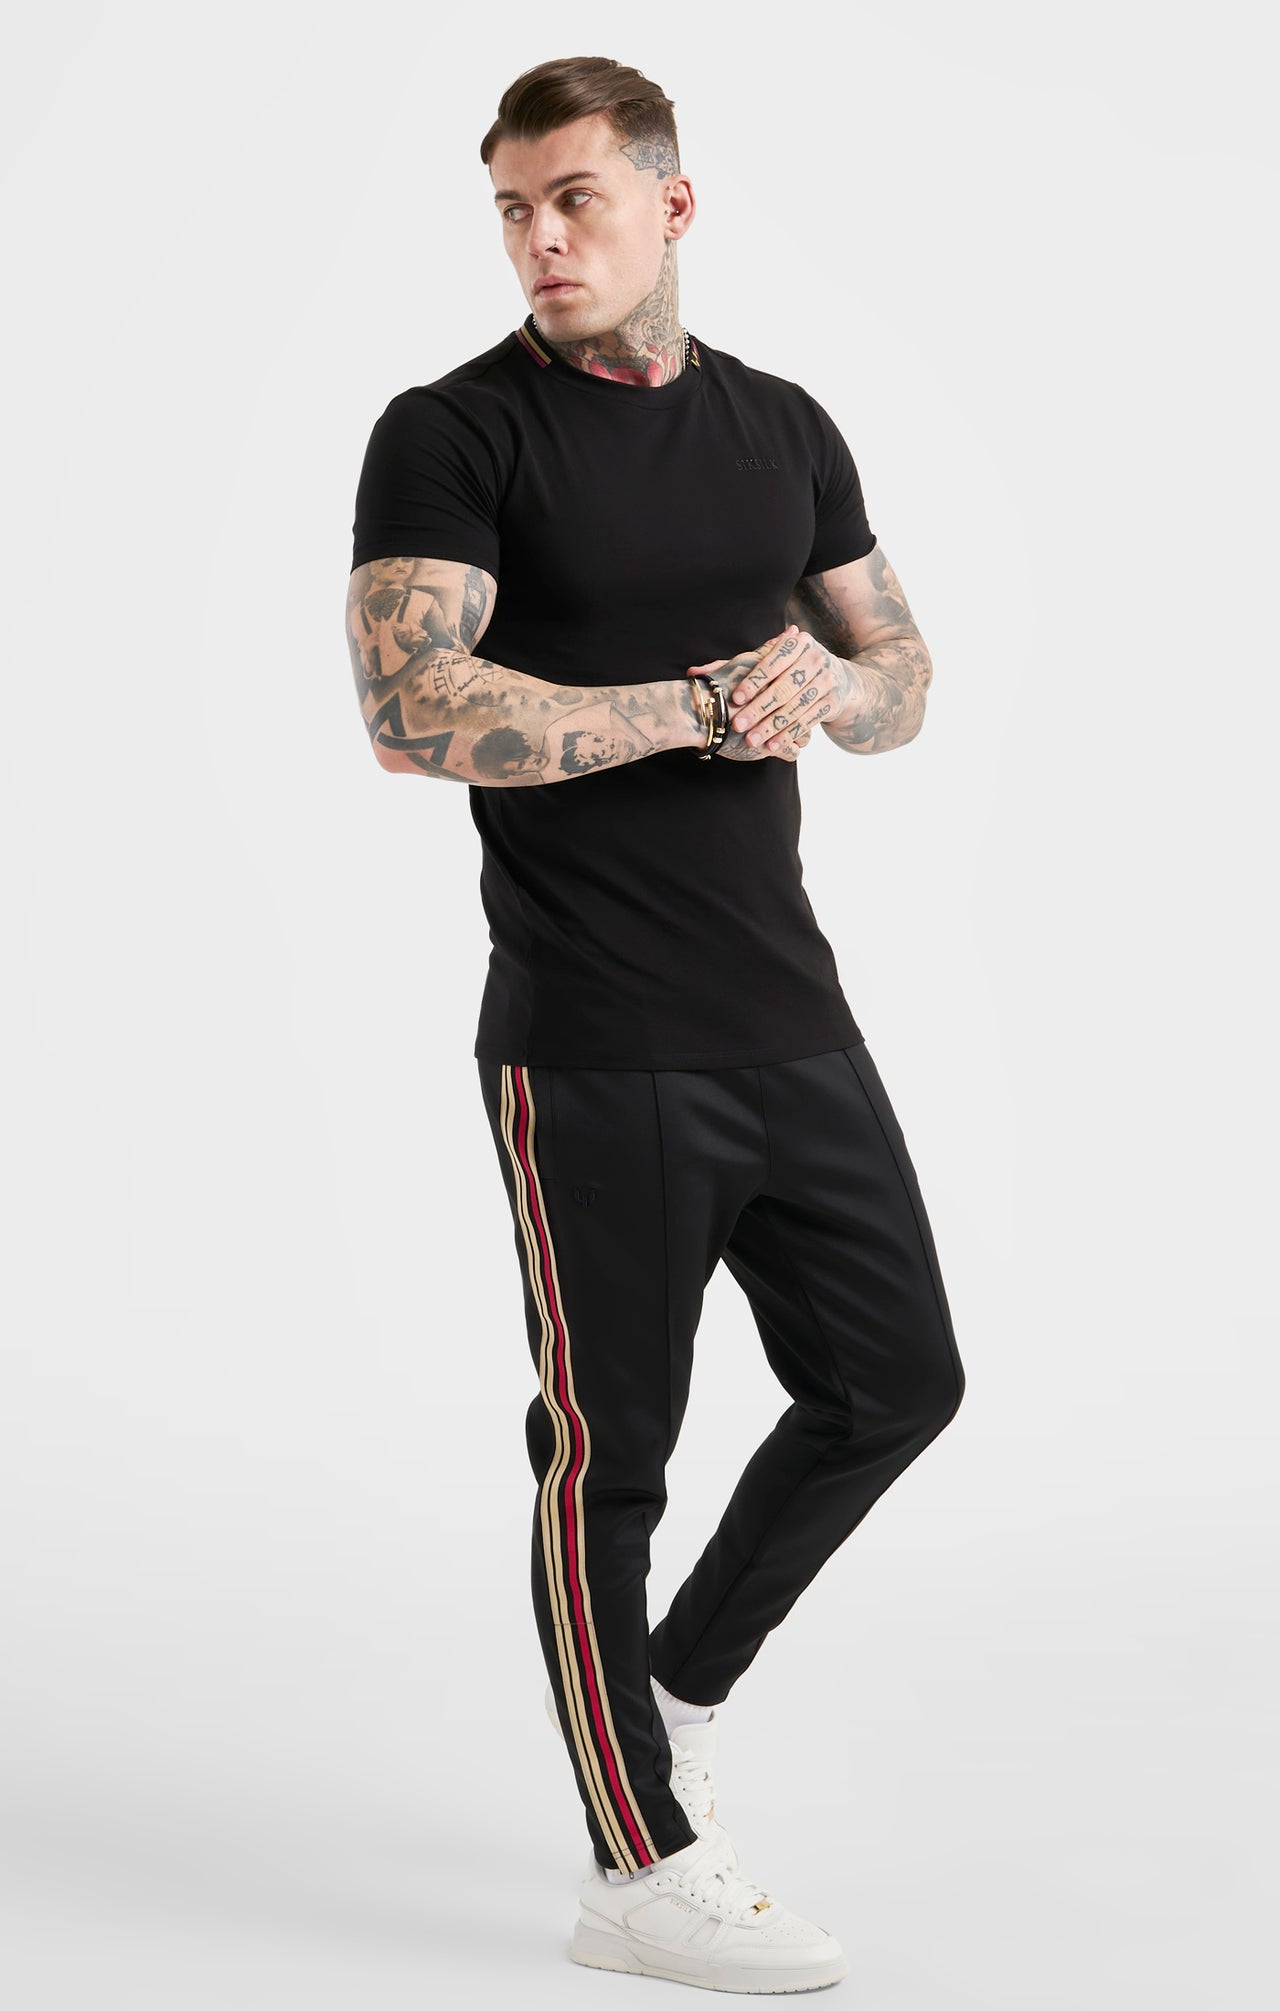 Messi x SikSilk Black Collar Muscle Fit T-Shirt (2)